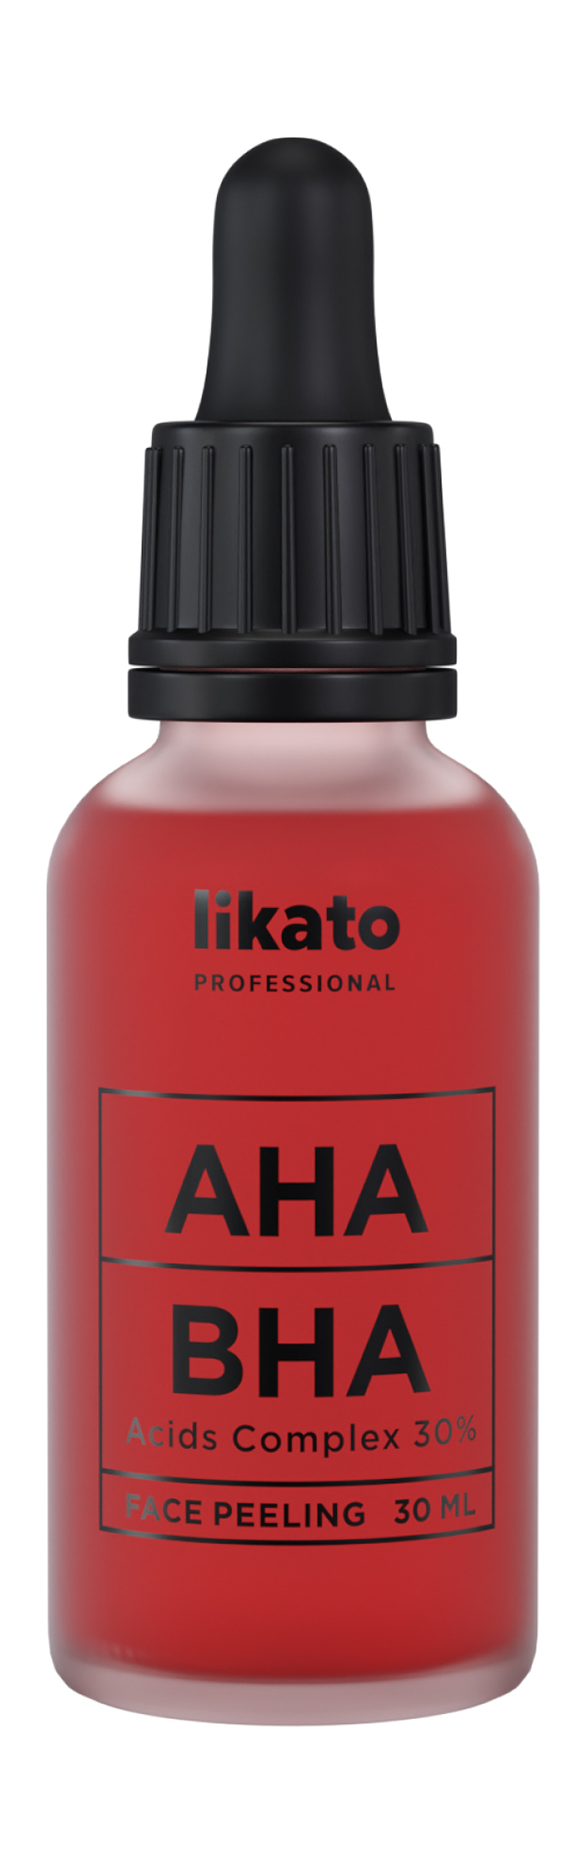 Пилинг для лица Likato Professional AHA + BHA Acids Complex 30% отшелушивающий, 30 мл